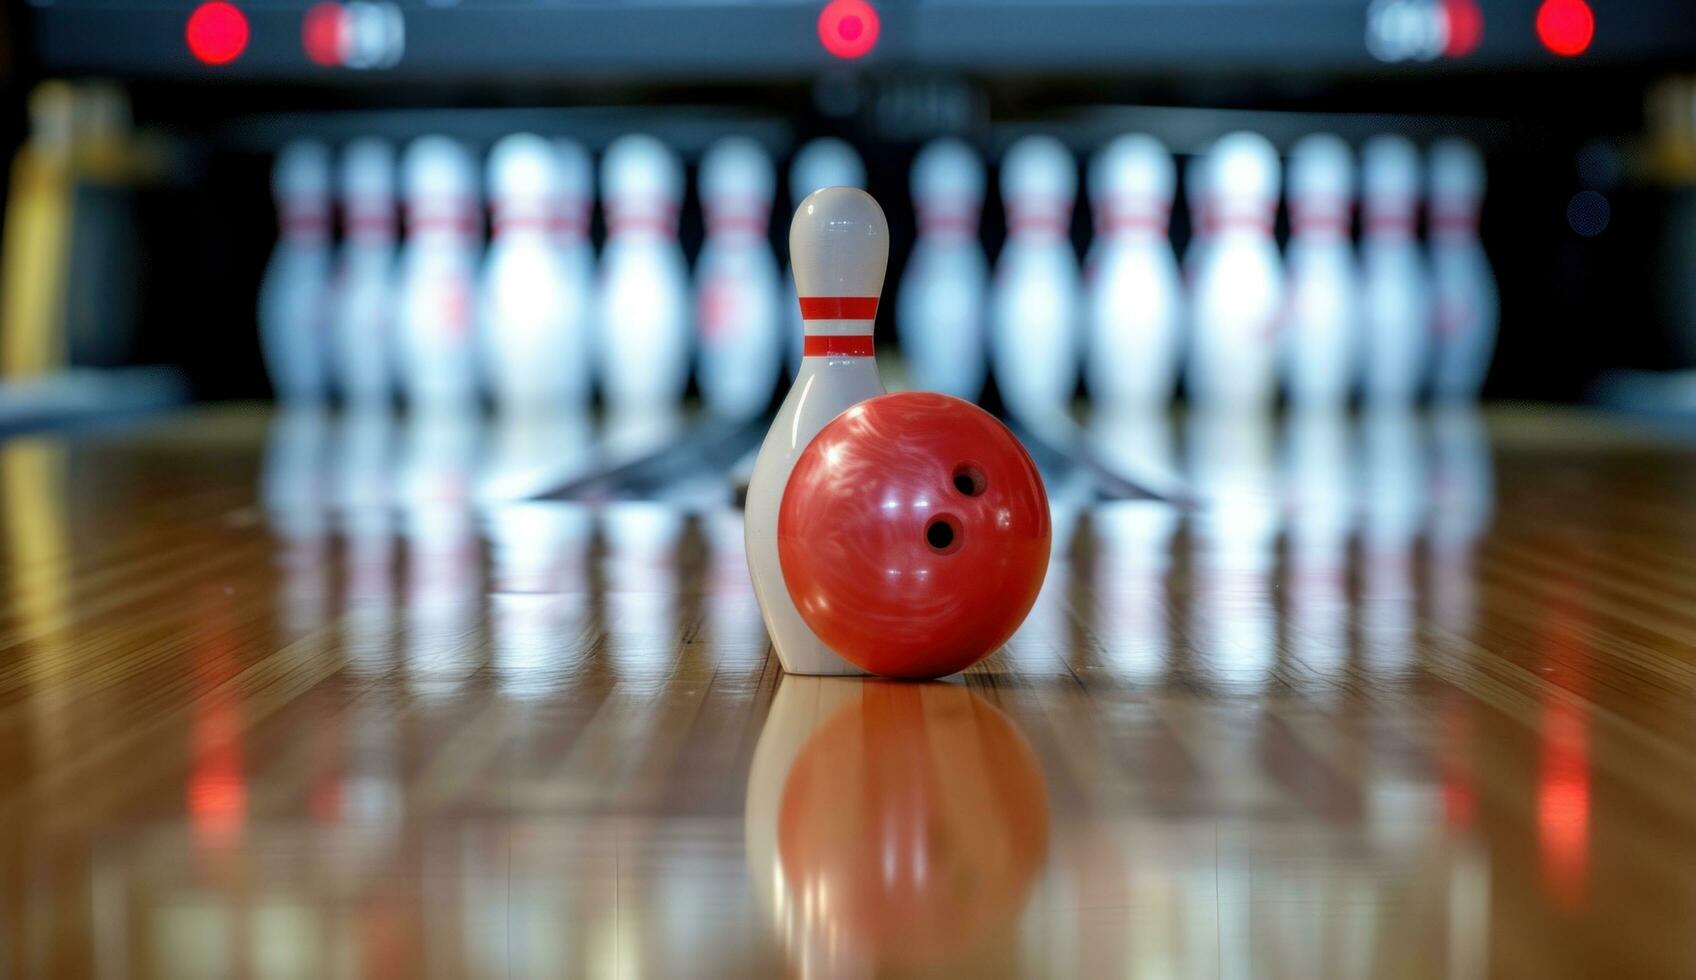 AI generated a bowling ball and pins hitting photo